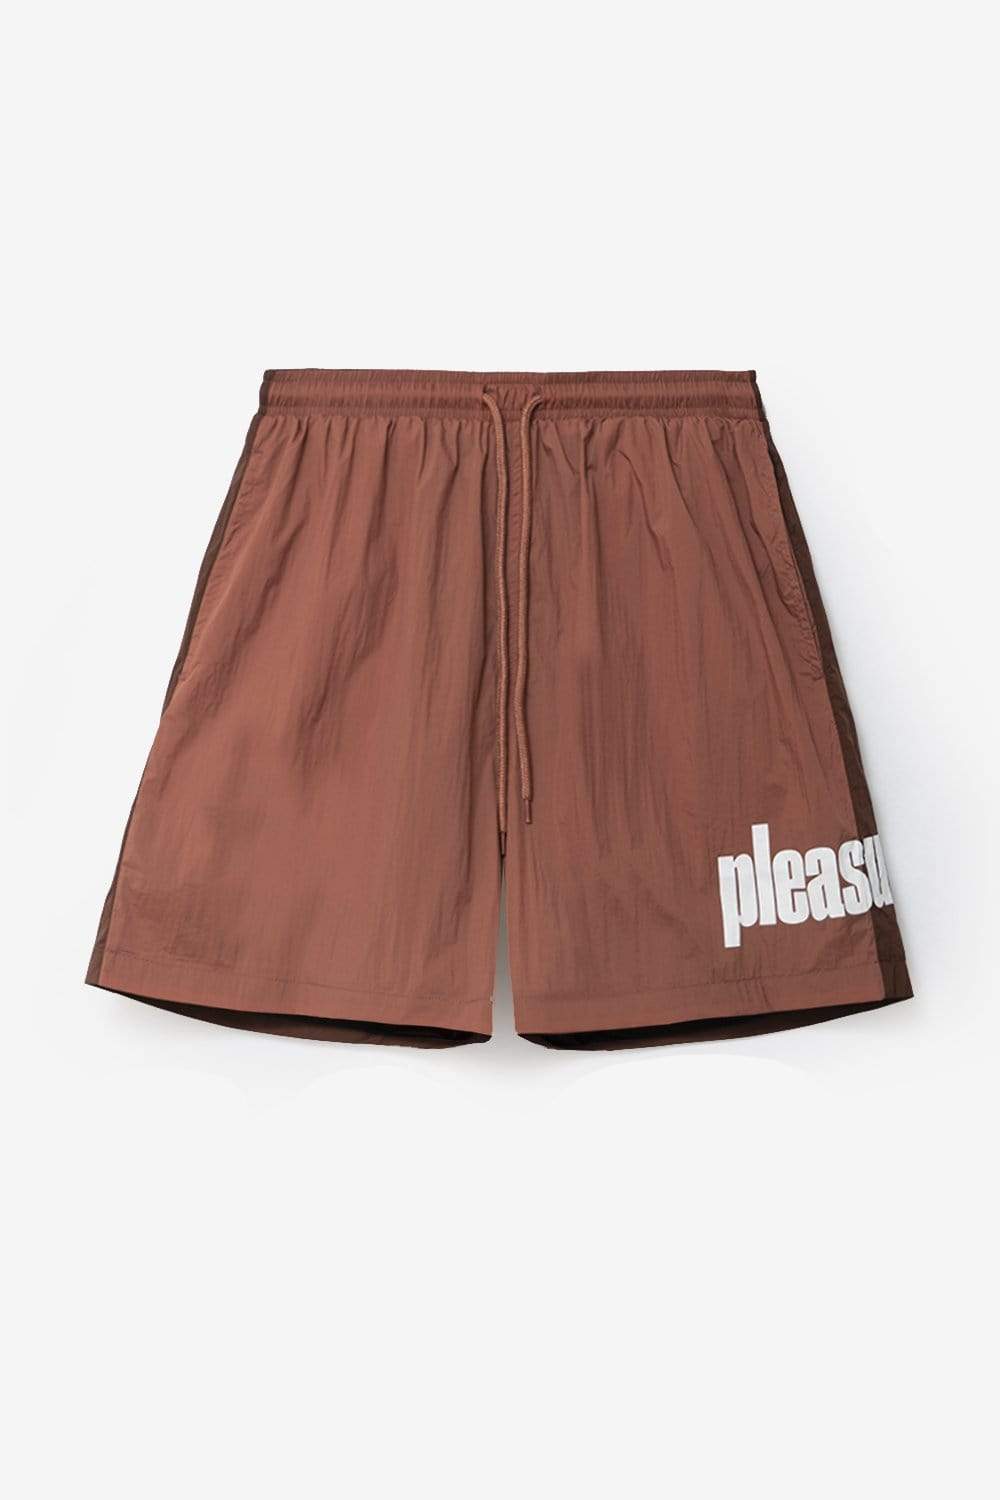 PLEASURES Electric Active Shorts (Maroon)